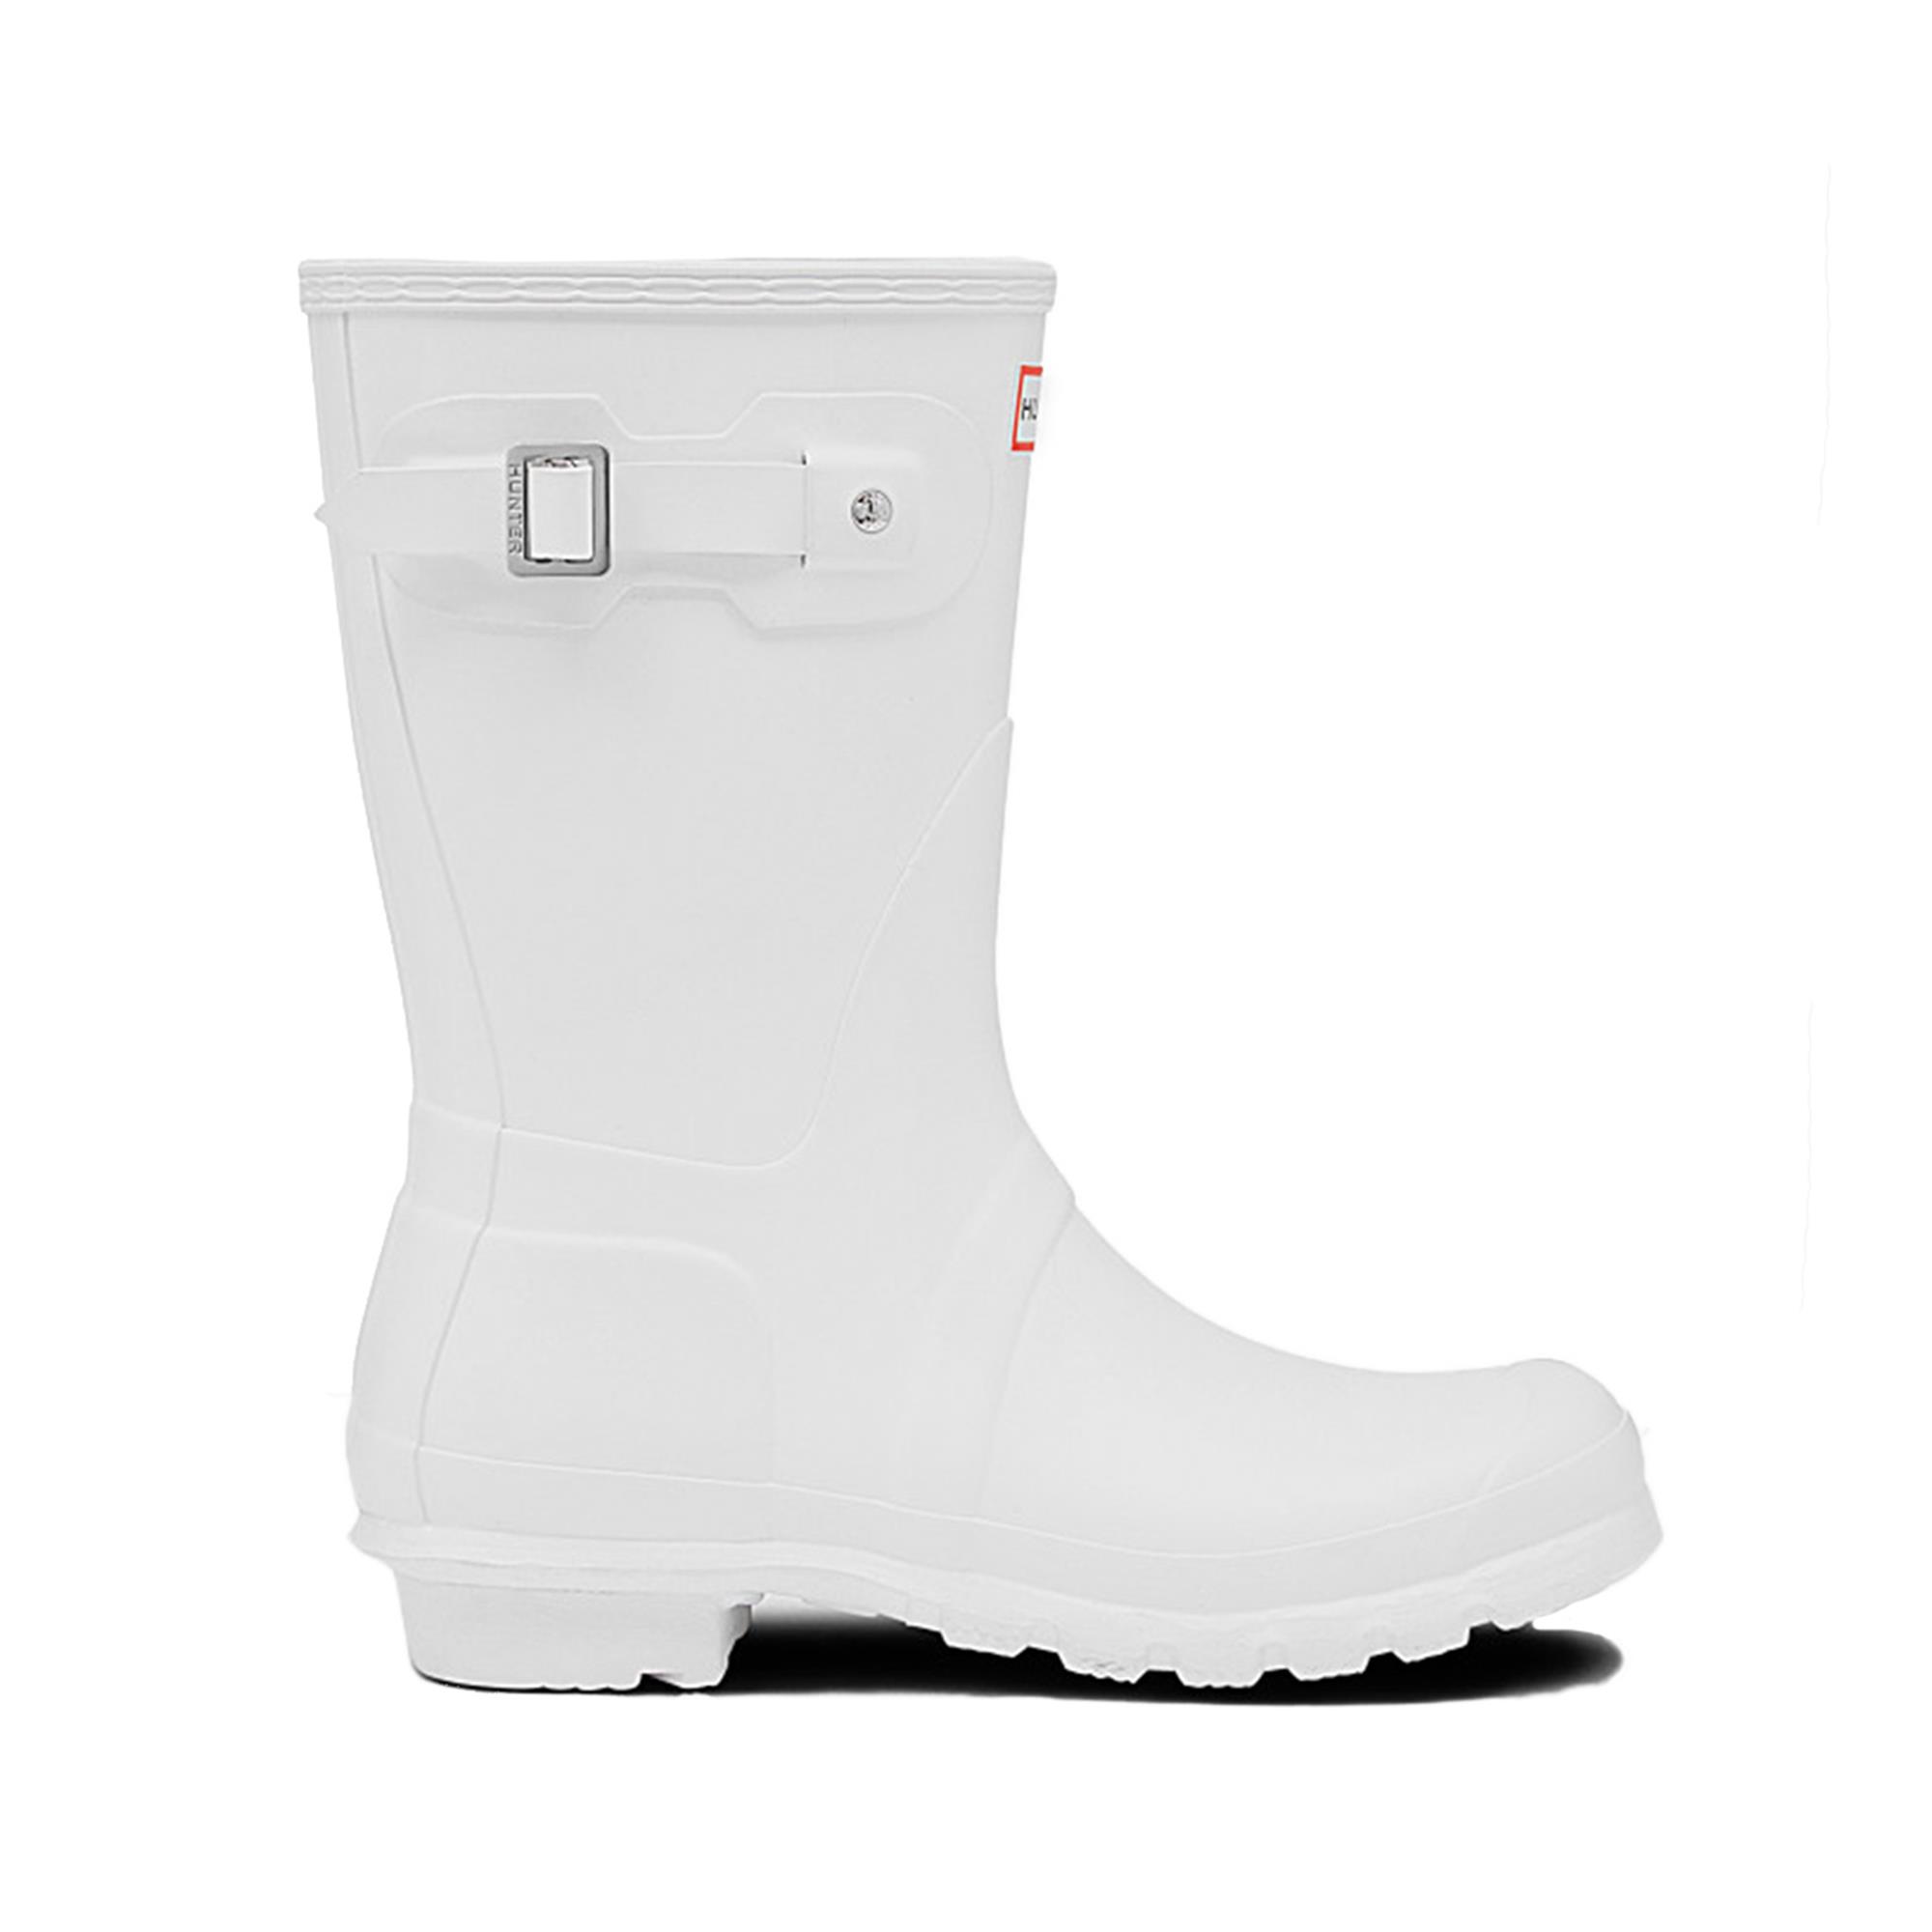 Hunter Original Short Ladies White Boots 5 5054916139601 | eBay